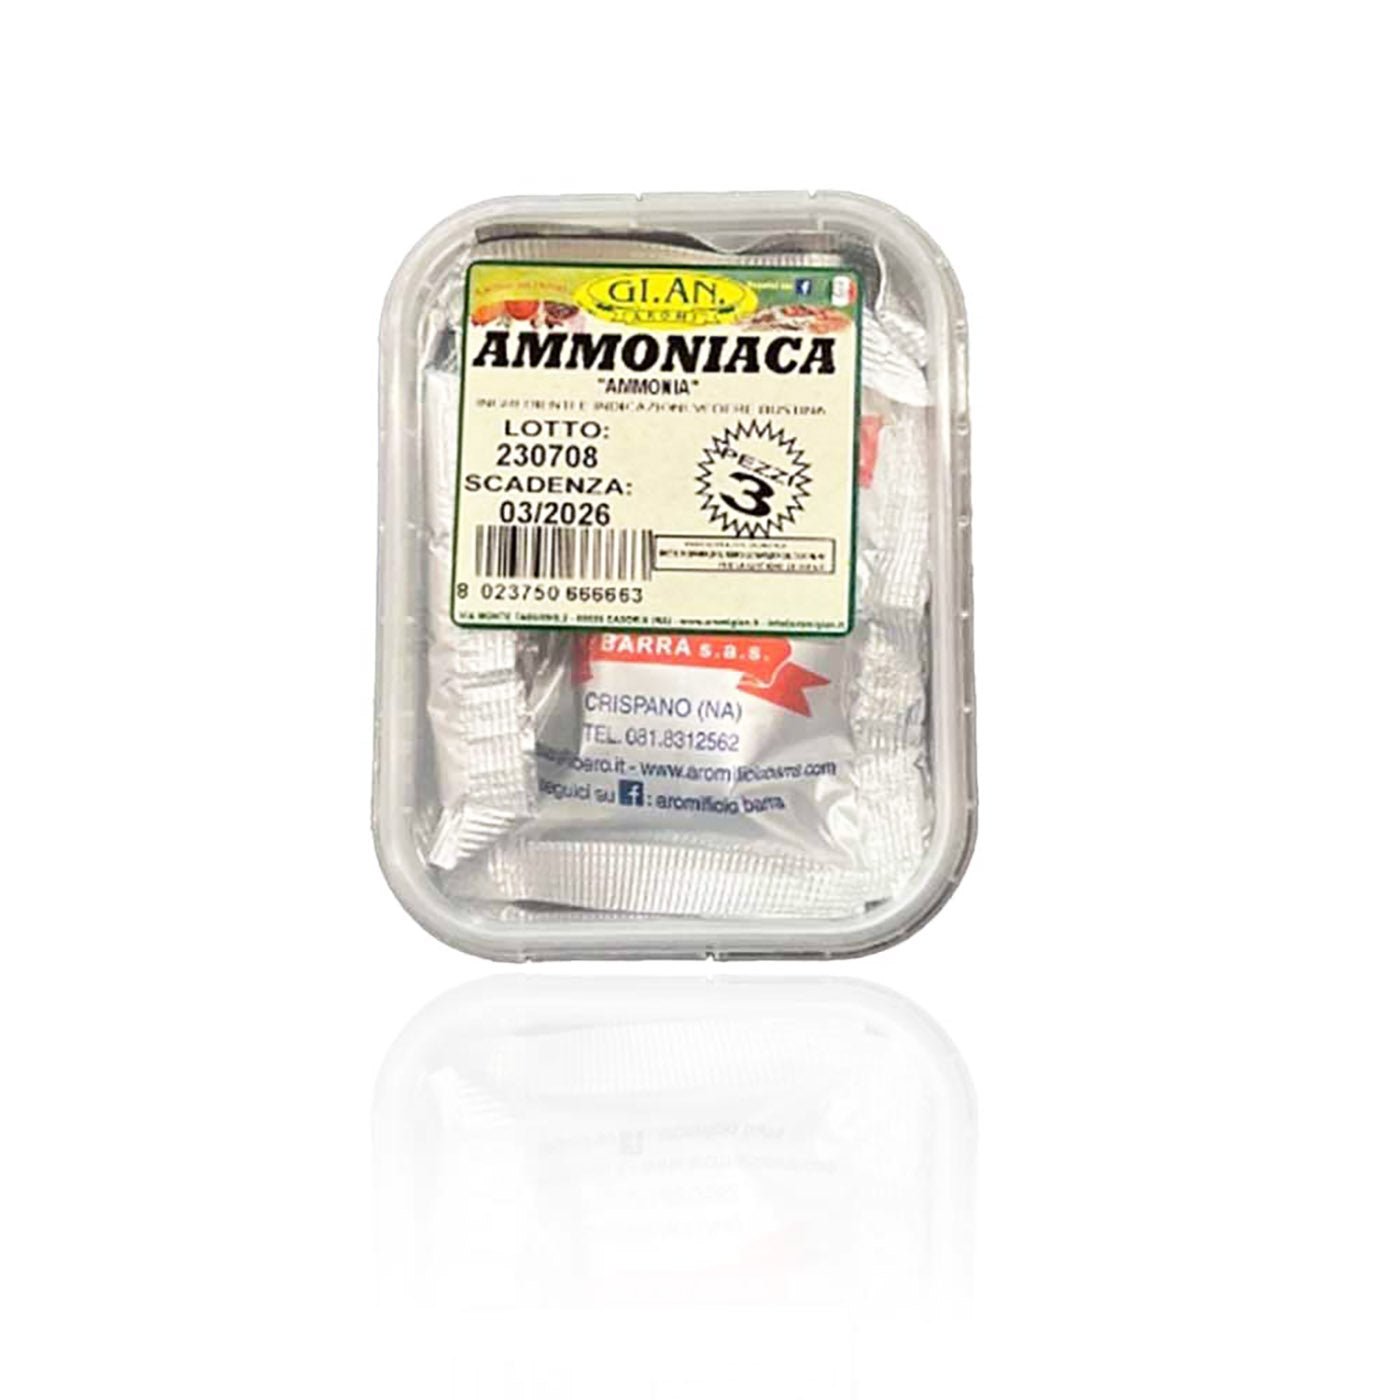 GI. AN. Ammoniaca - "Ammonia" - italienisch-einkaufen.de